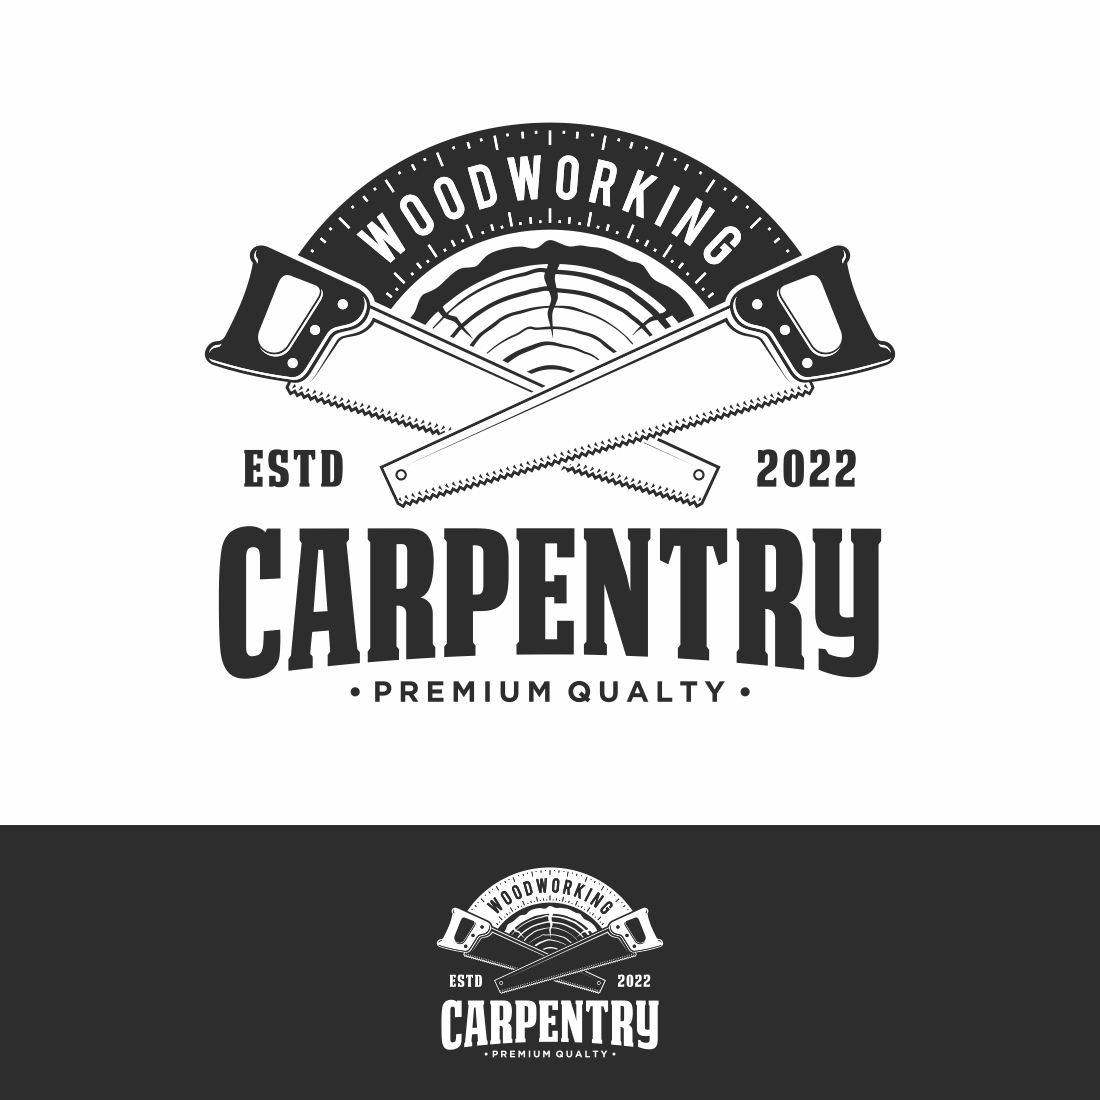 carpentry retro vintage logo design – Only $6 preview image.